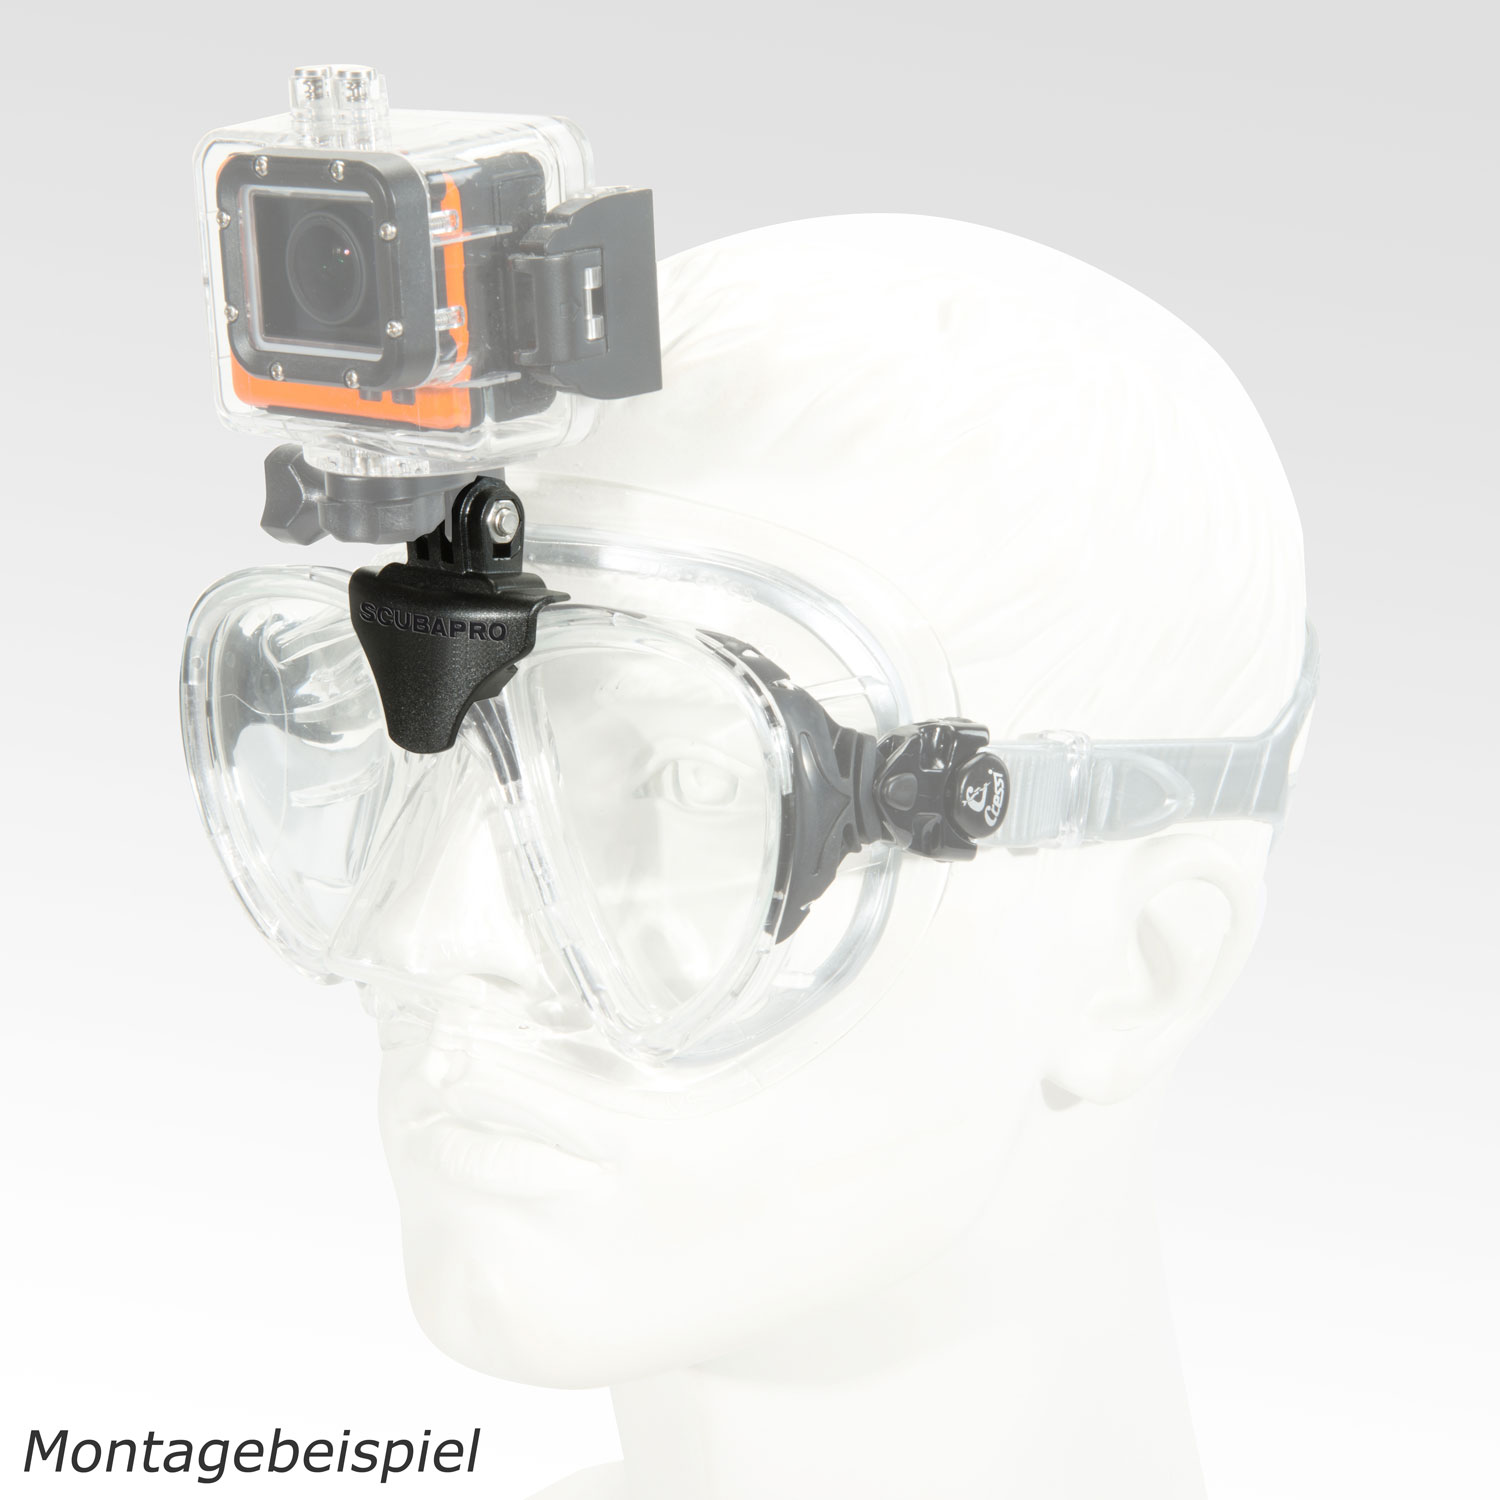 Scubapro Holder for GOPRO Cameras Maskenhalterung for Go pro Camera 